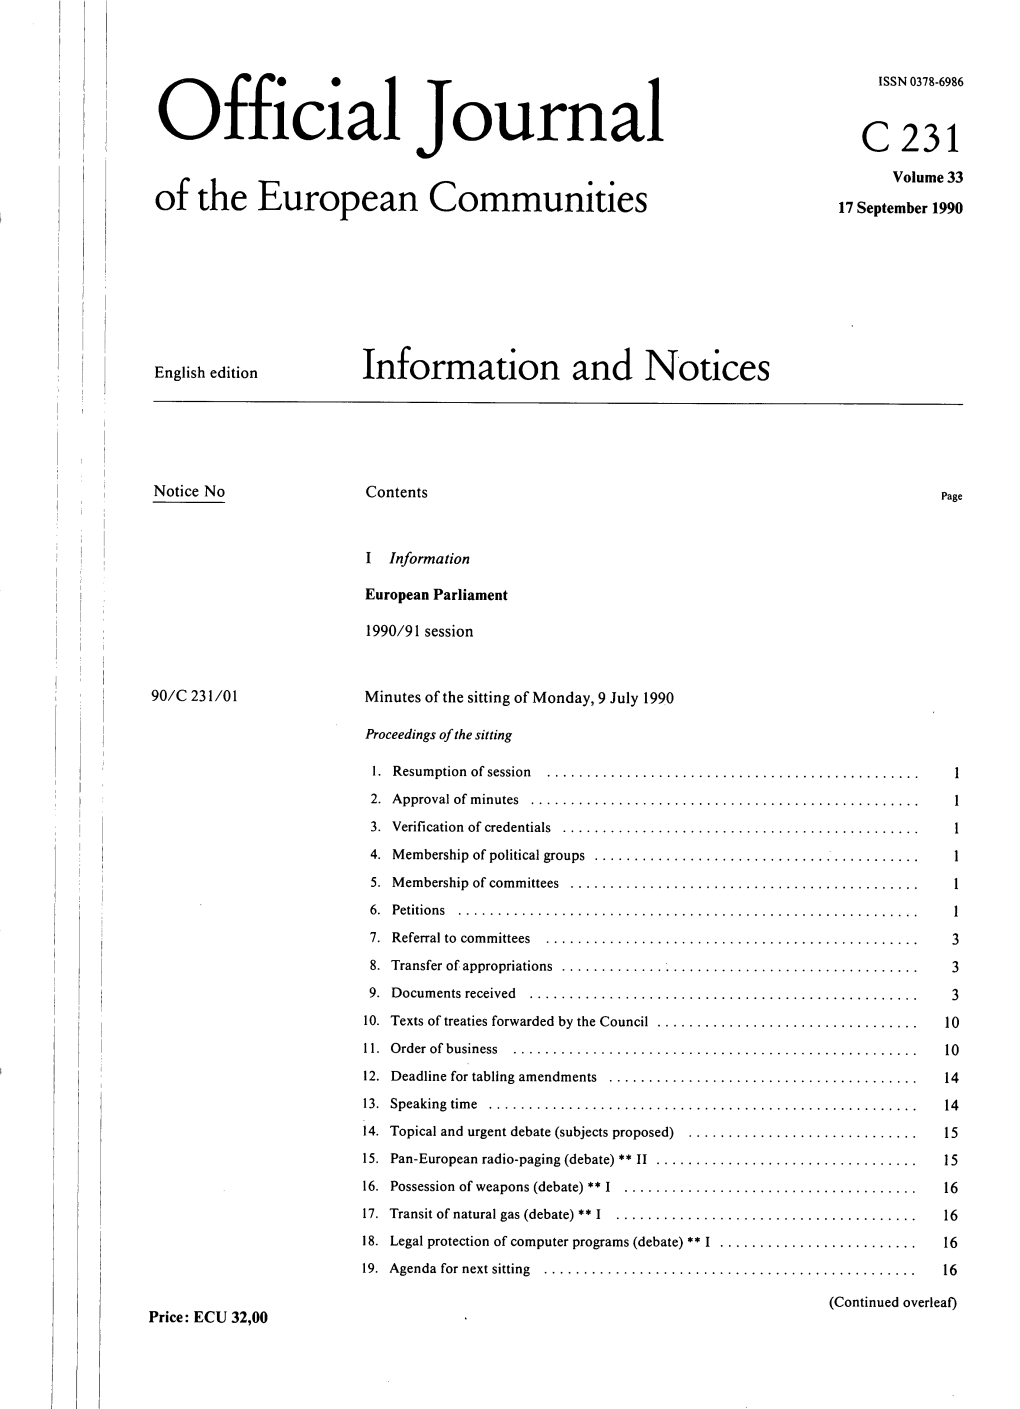 Official Journal C 231 Volume 33 of the European Communities 17 September 1990